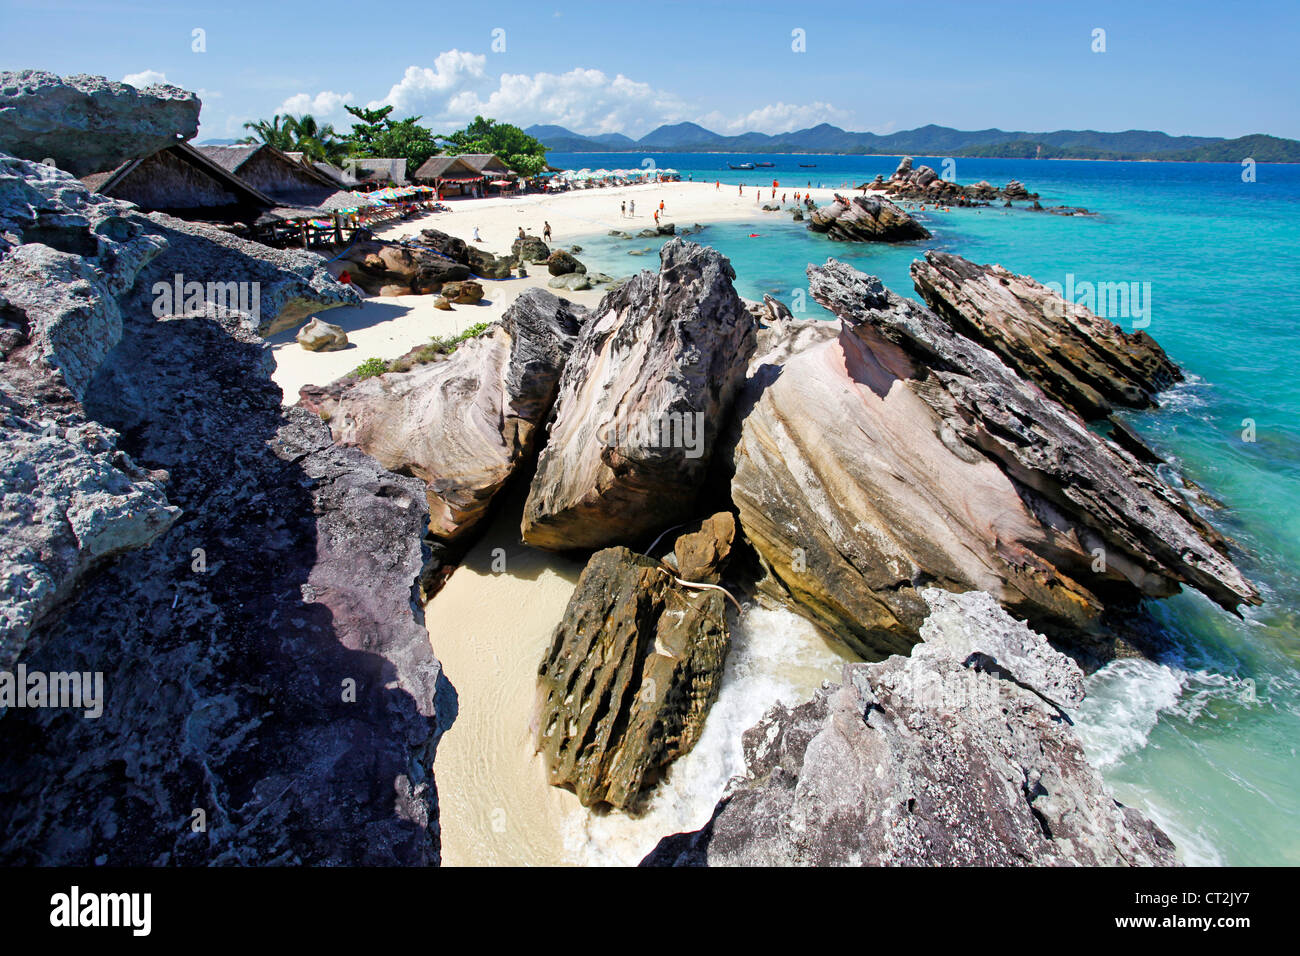 Rocks on the tropical sandy beach of Khai Nai Island, Phuket, Thailand Stock Photo